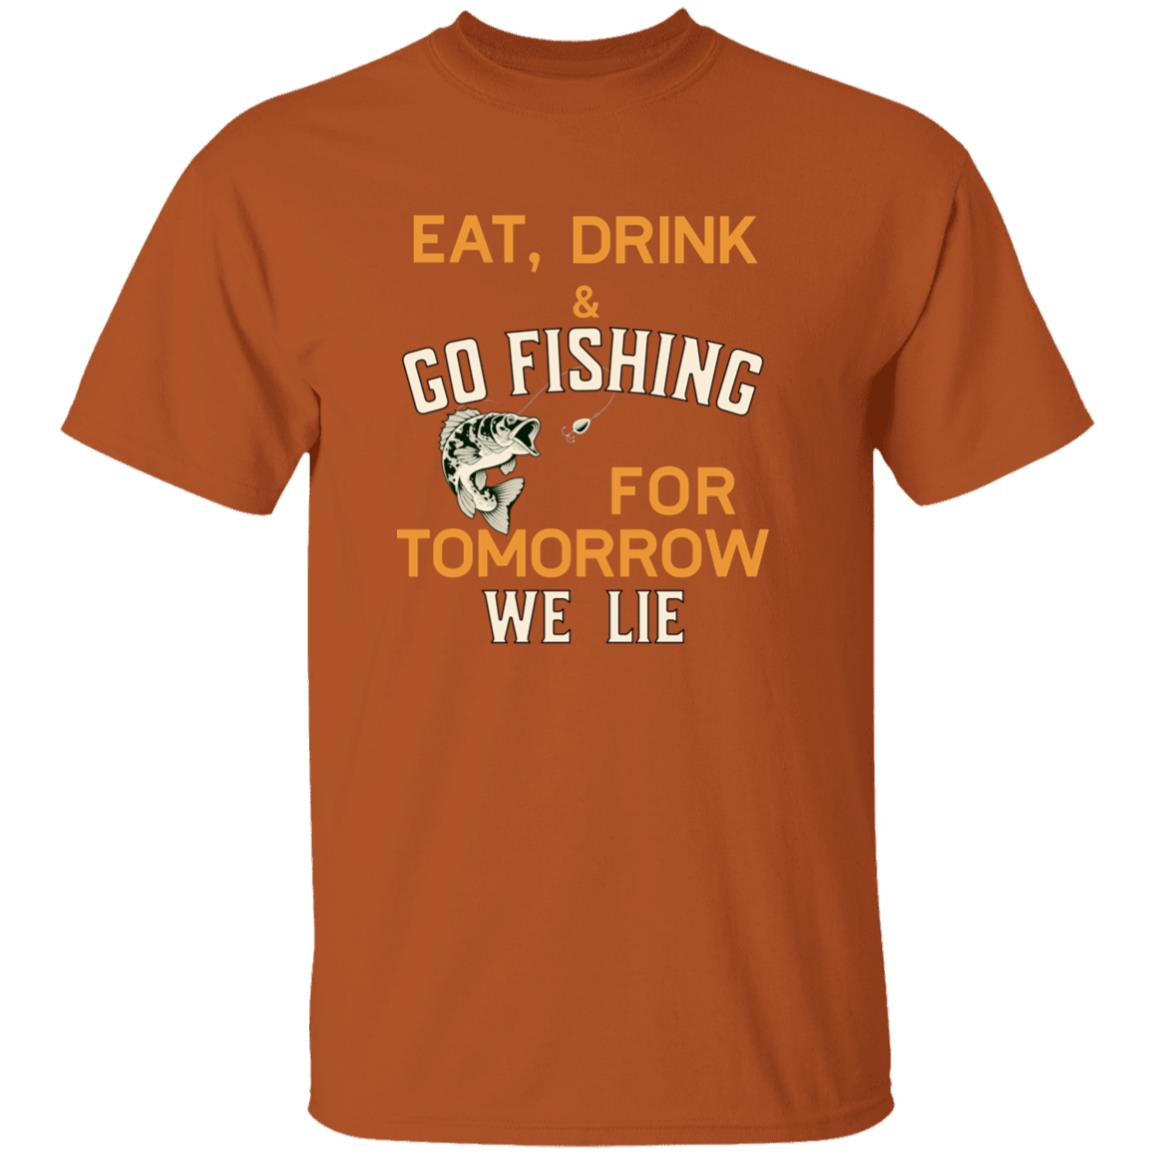 Eat drink & go fishing for tomorrow we lie k t-shirt texas-orange